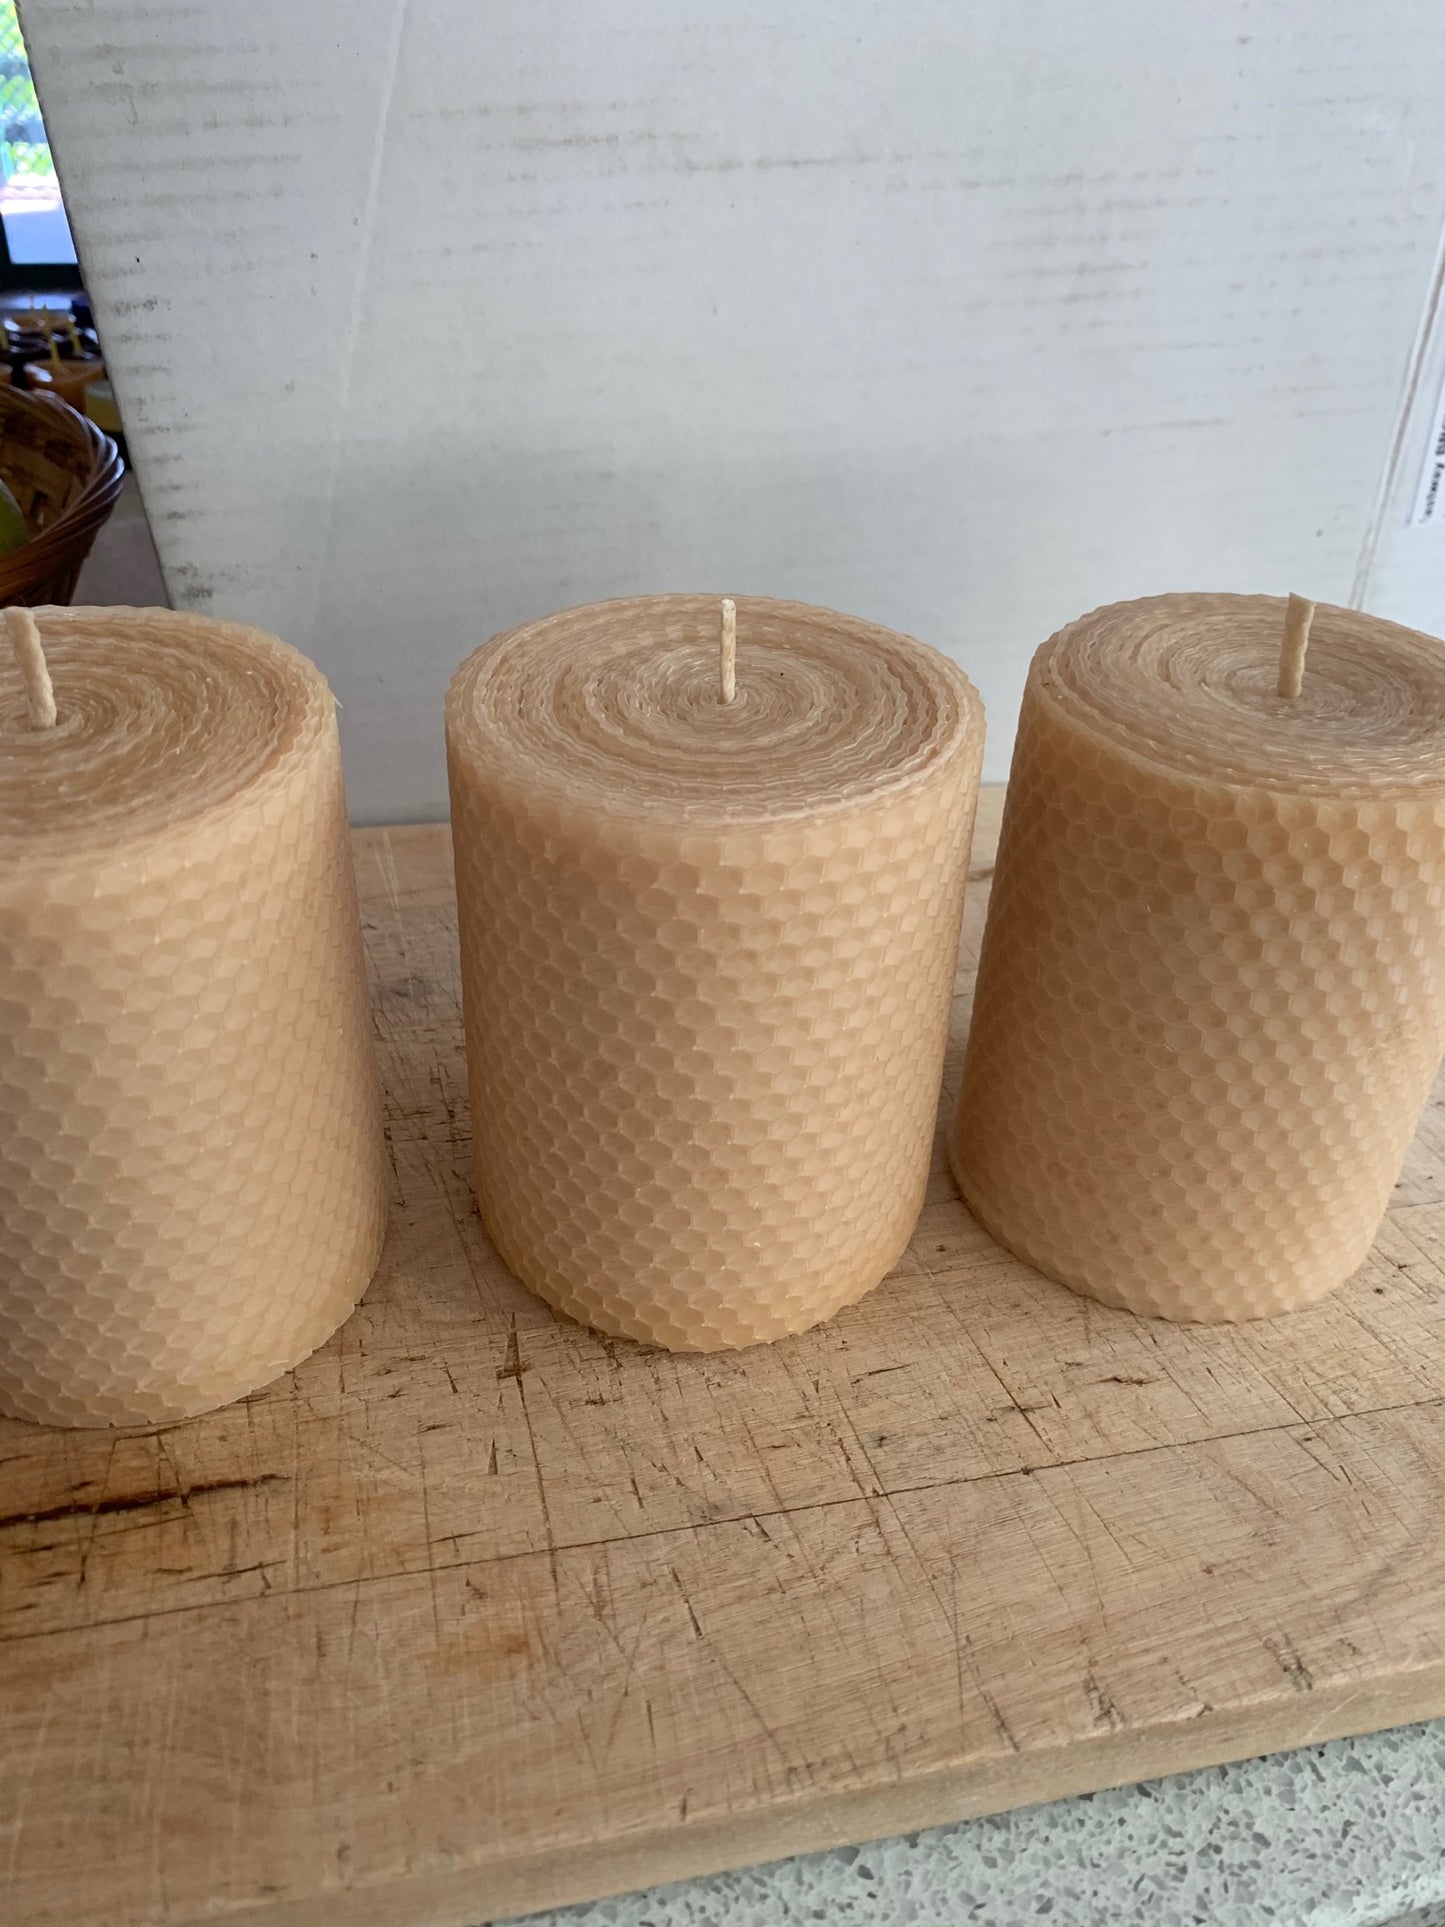 Handmade Natural Beeswax 10cm * 8cm Pillar Candle